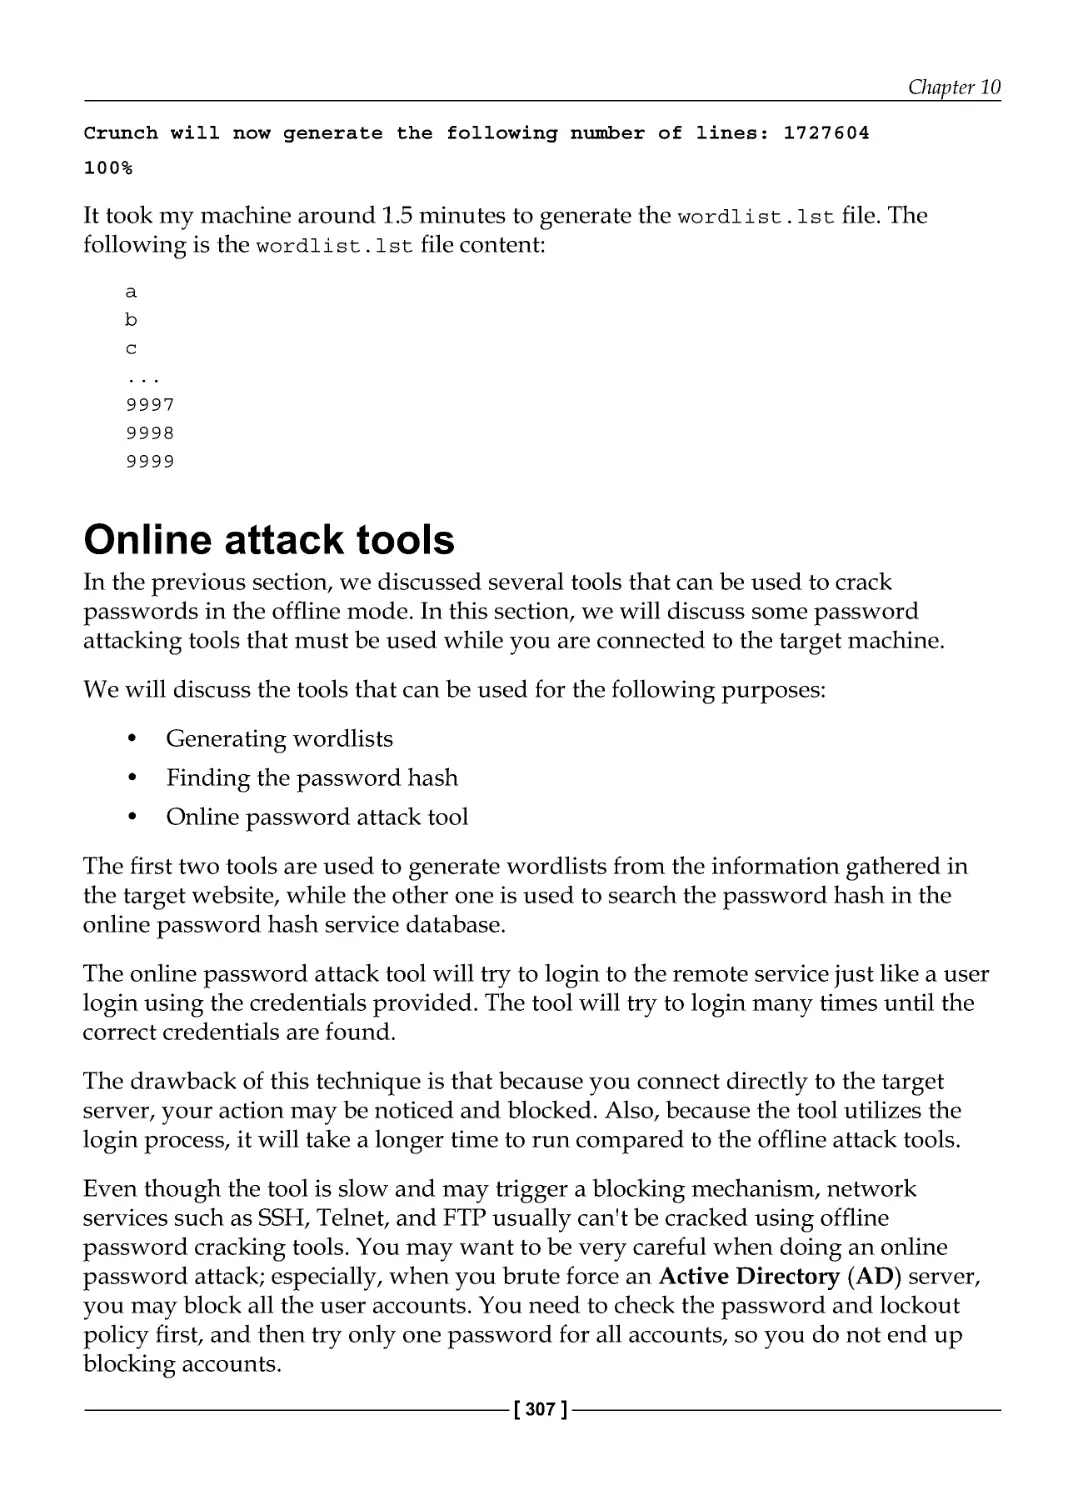 Online attack tools